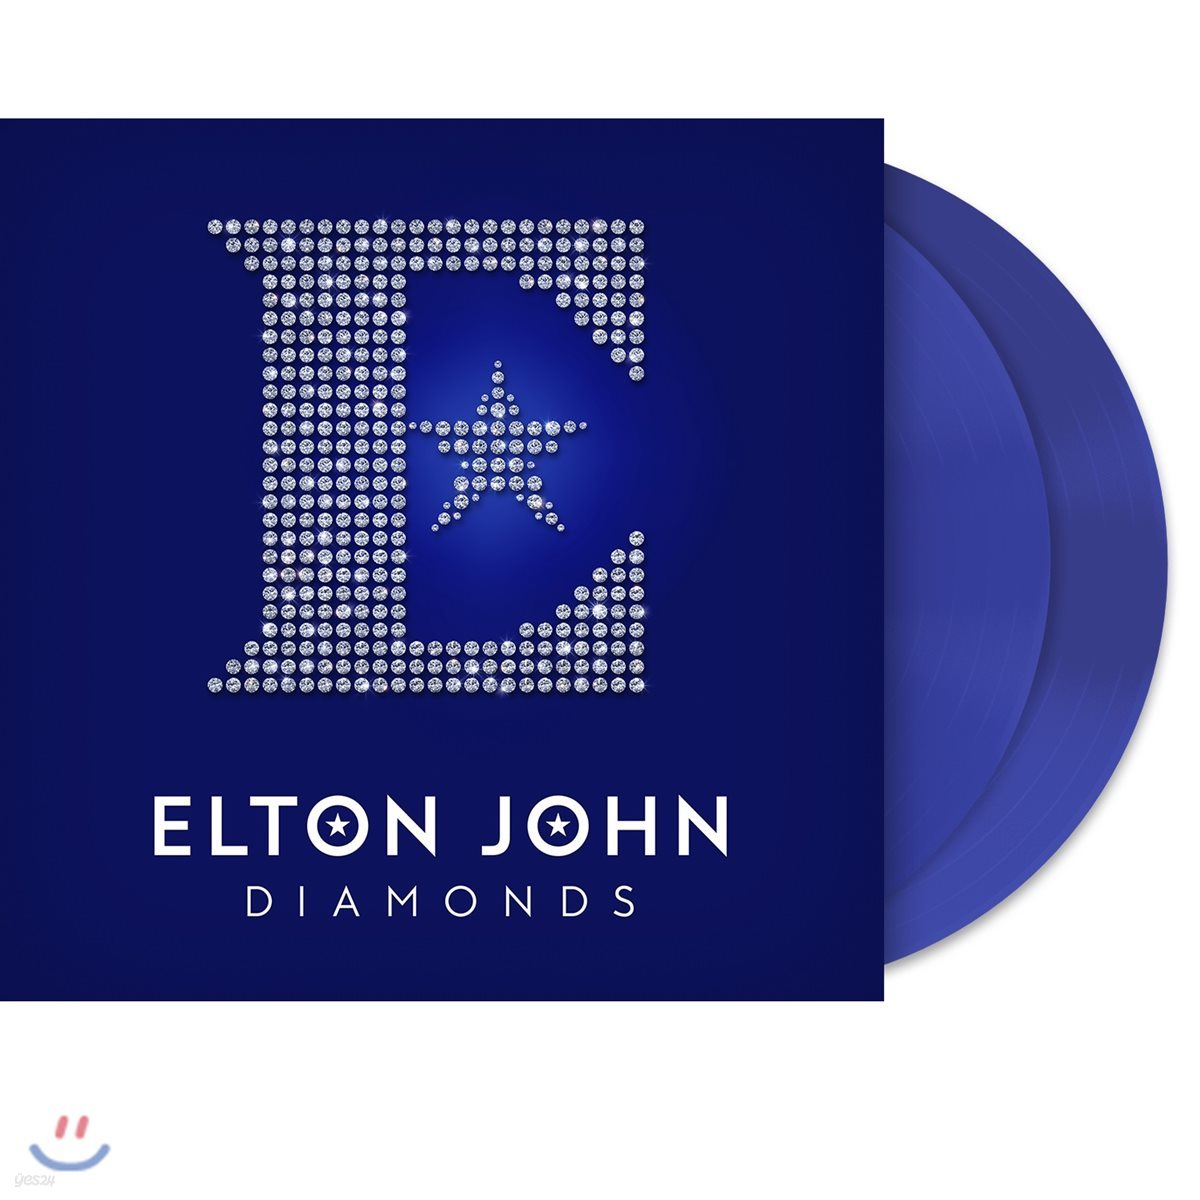 Elton John (엘튼 존) - Diamonds: The Ultimate Greatest Hits [블루 컬러 2LP]